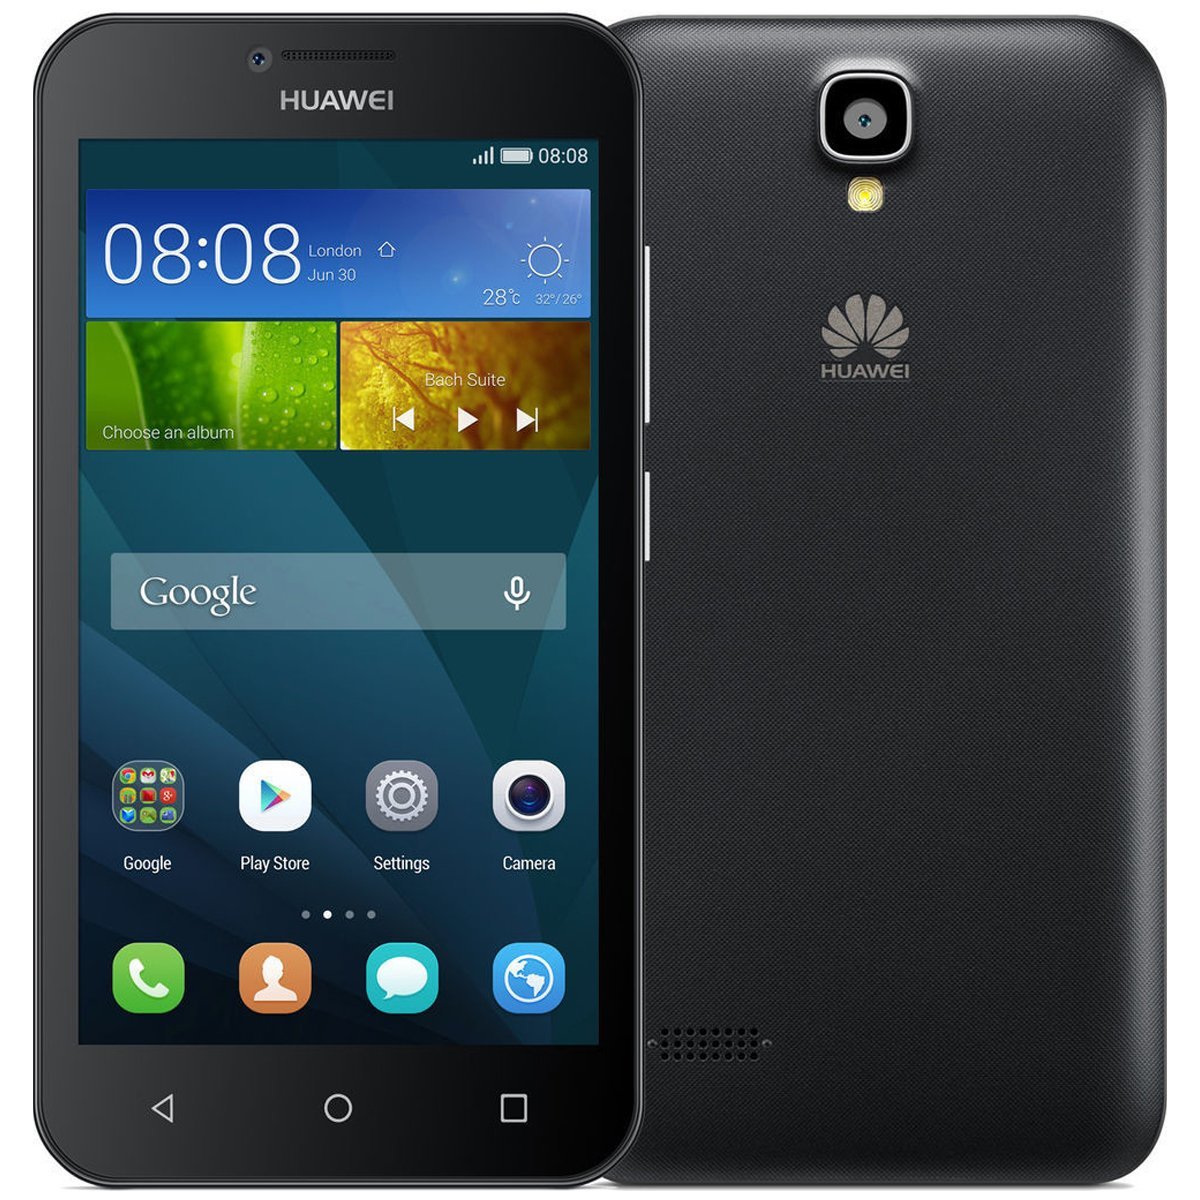 Huawei Ascend Y560 Refurbished Android Smartphone Unlocked - RueZone Smartphone Black Pristine 8GB